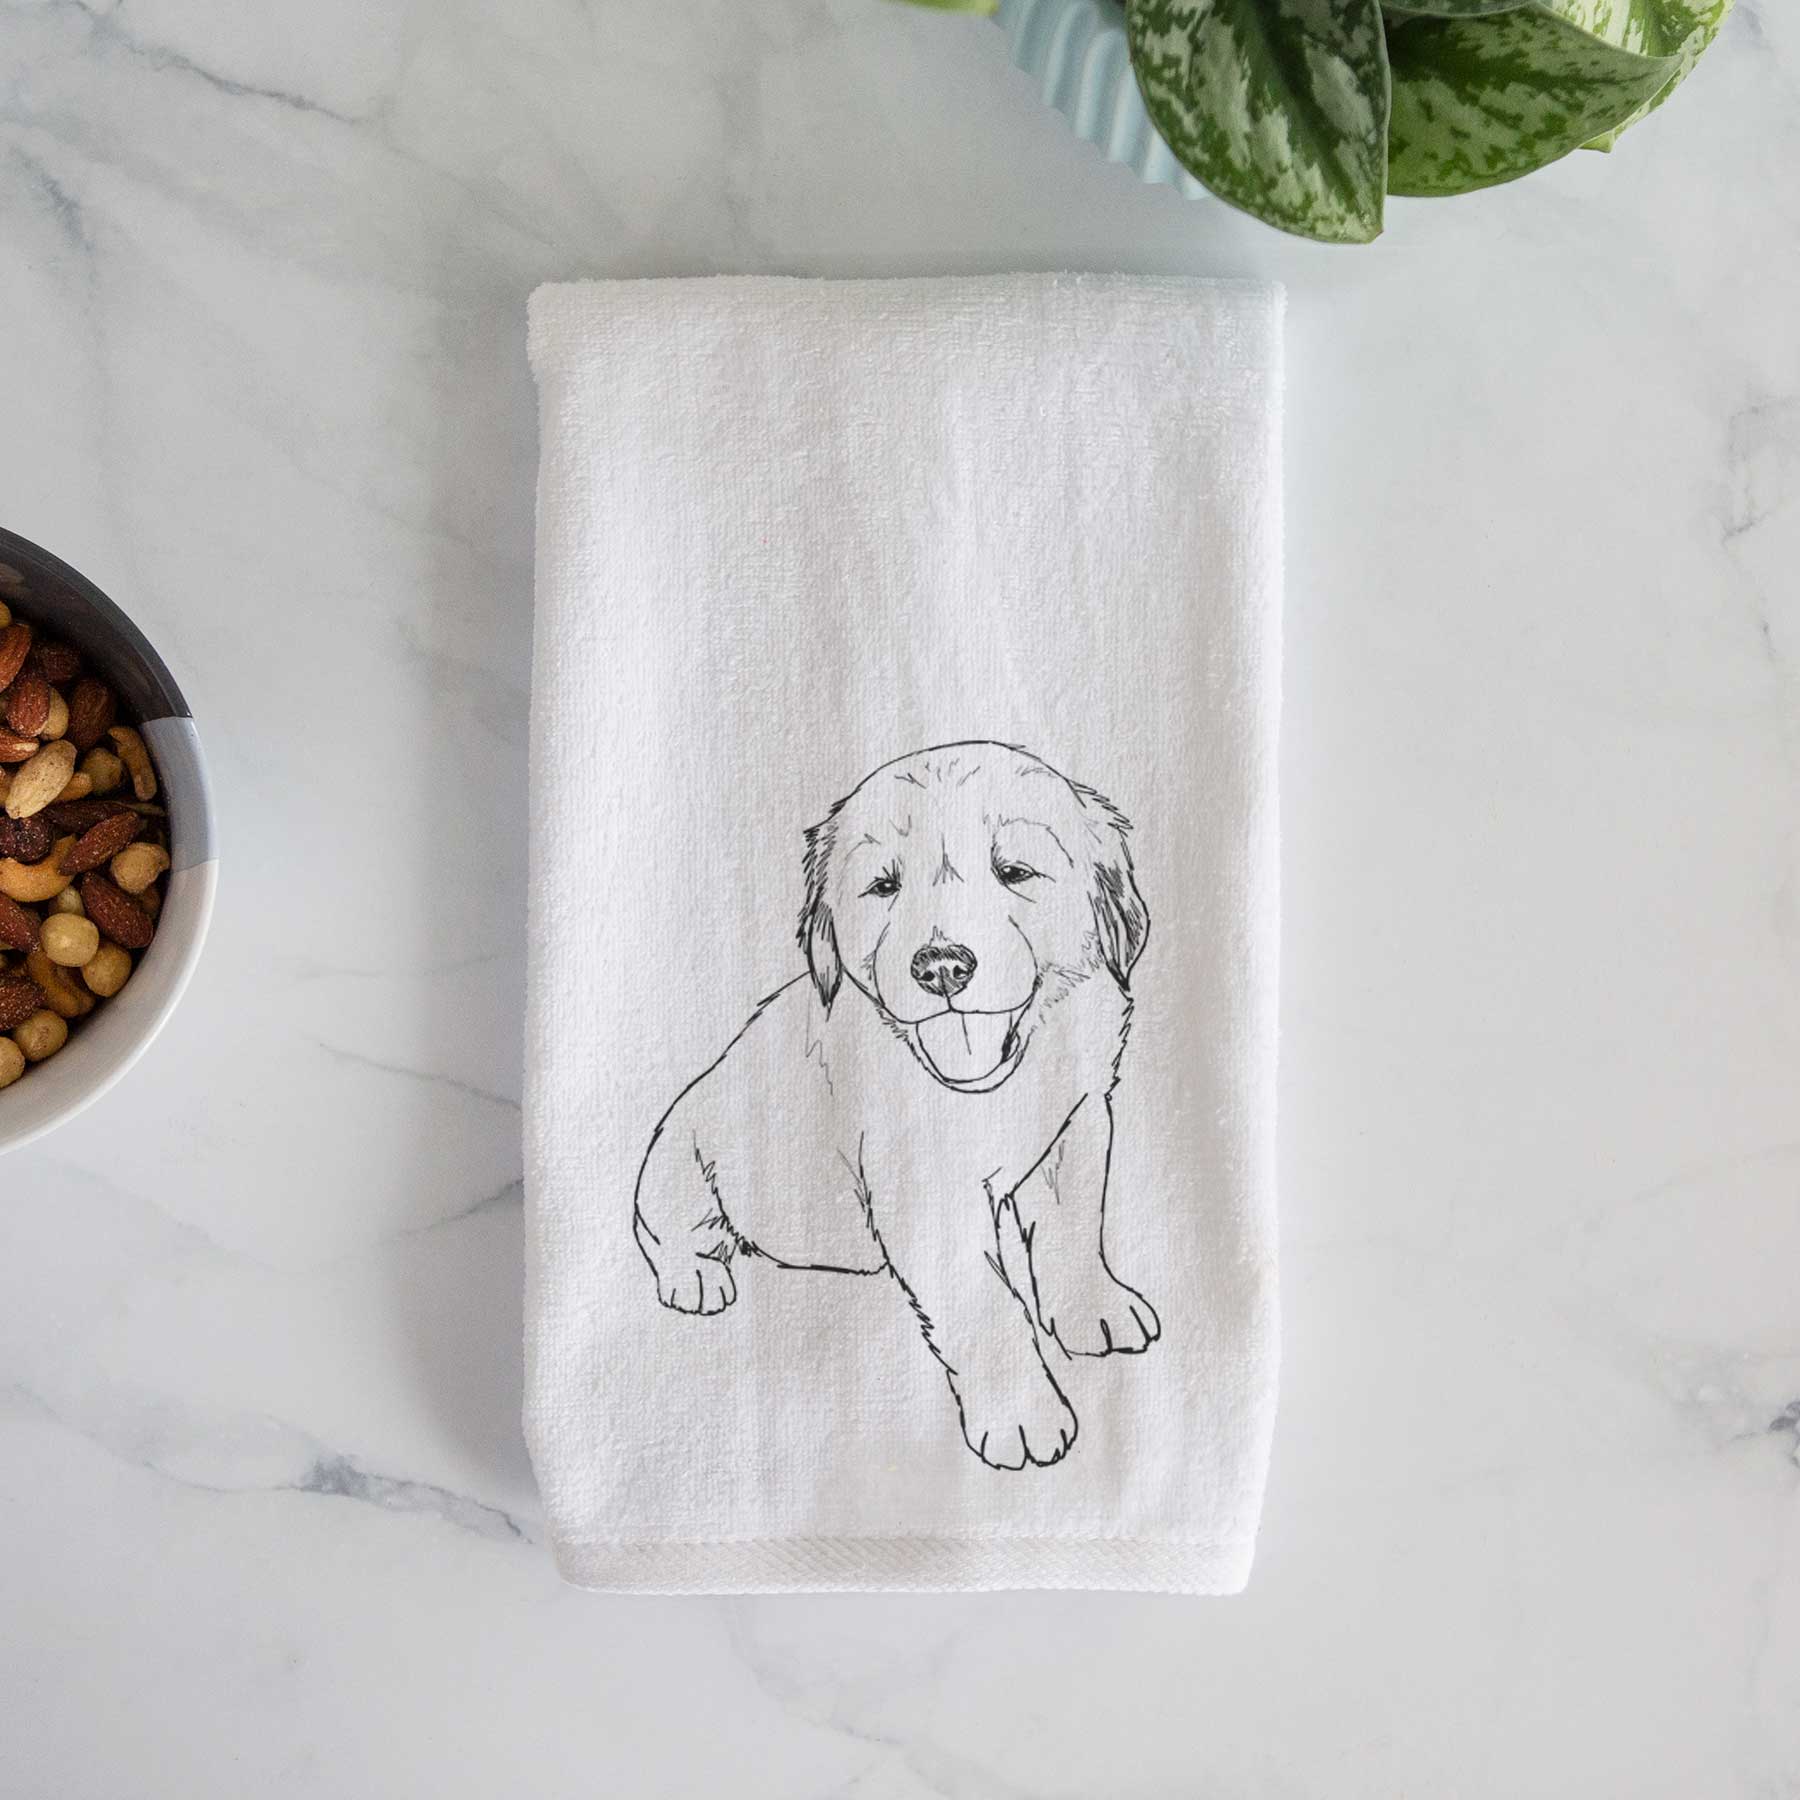 Doodled Loganator the Golden Retriever Puppy Hand Towel